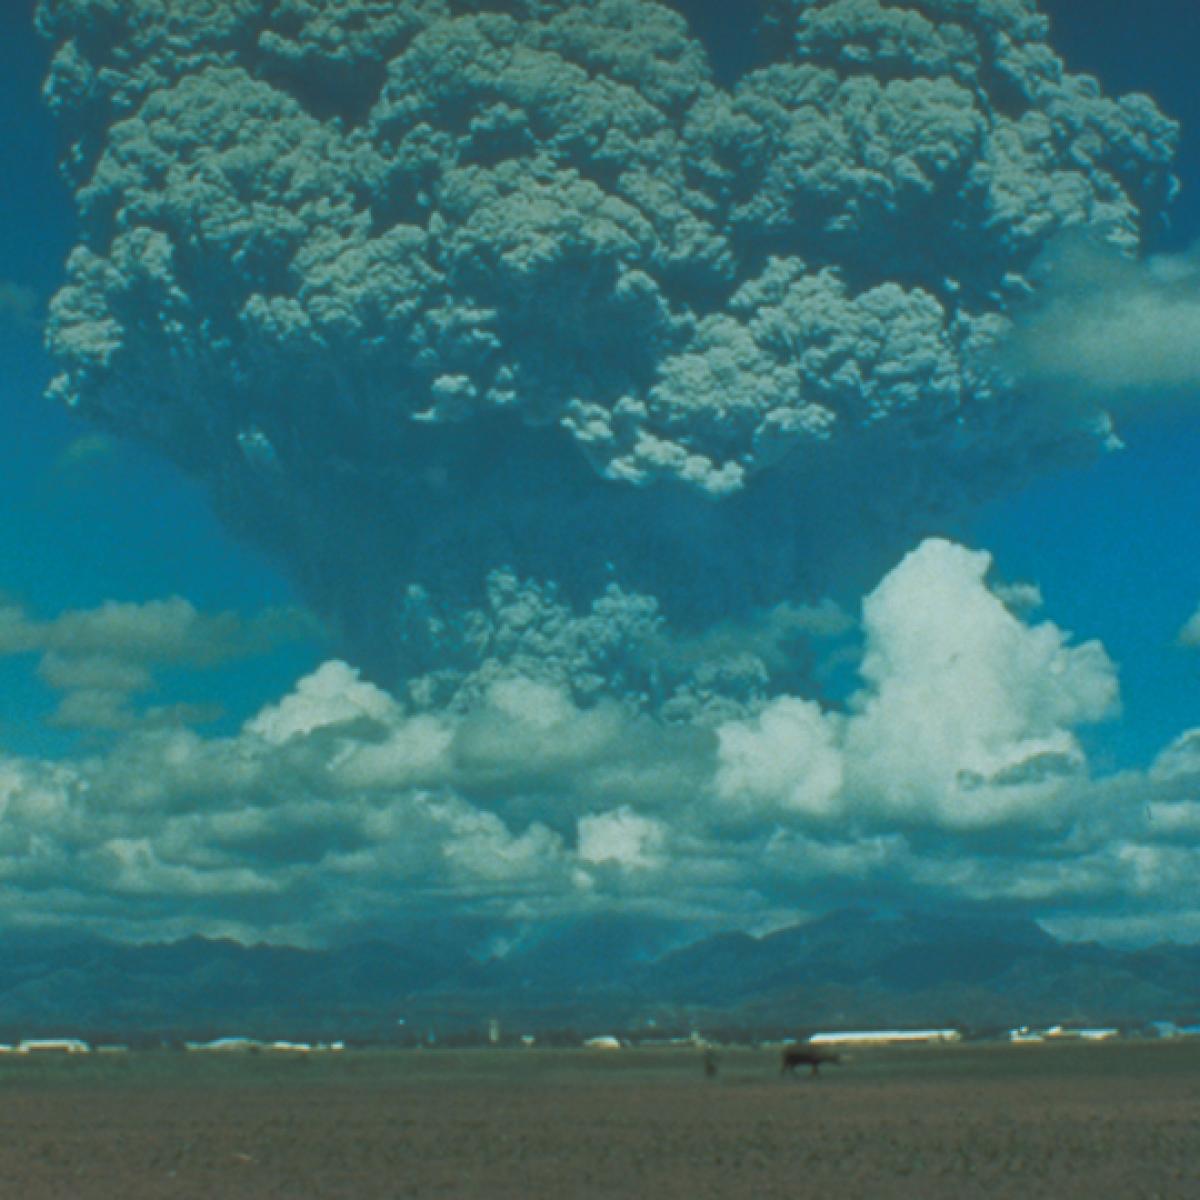 Mount Pinatubo eruption on June 15, 1991